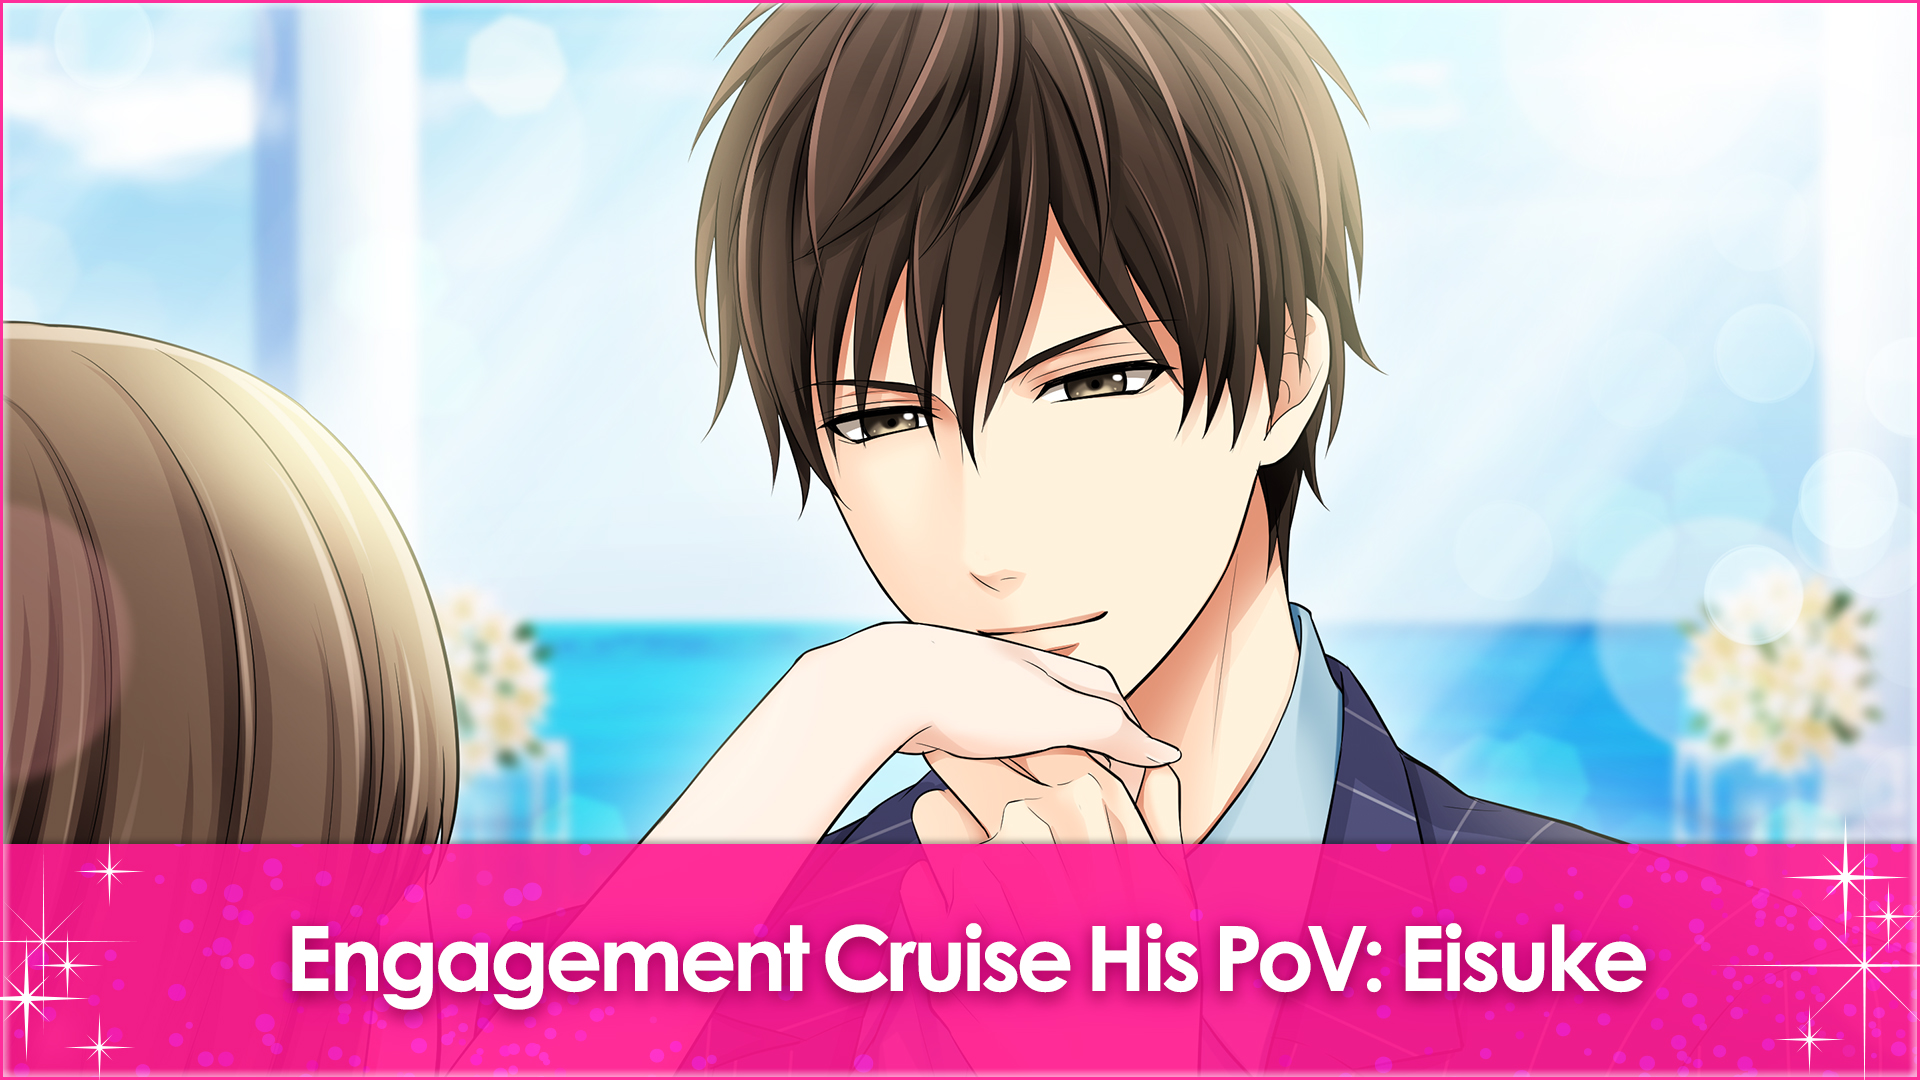 Engagement Cruise His PoV: Eisuke